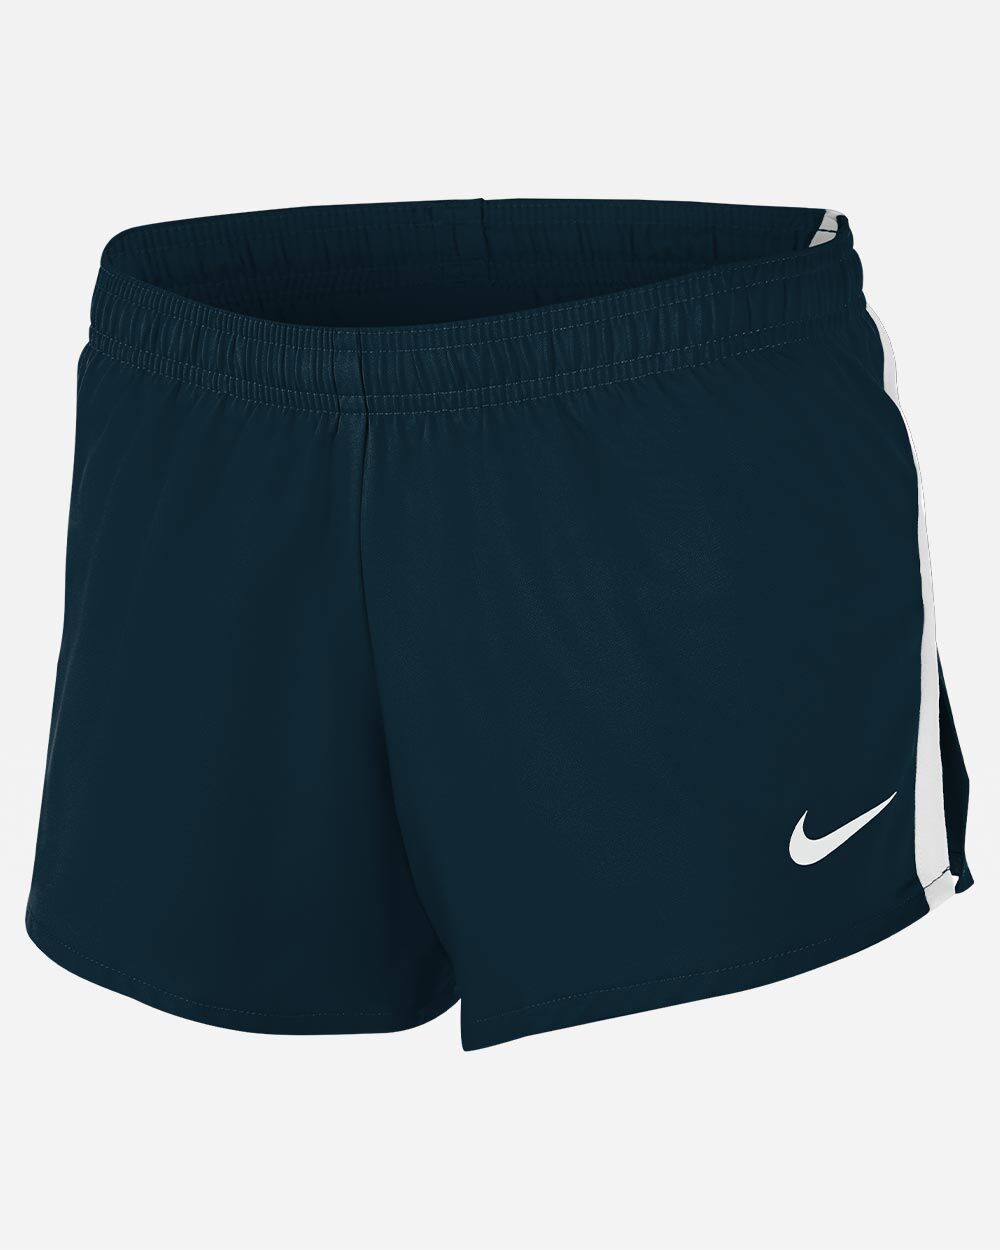 Pantalón corto para correr Nike Stock Azul Marino para Mujeres - NT0304-451